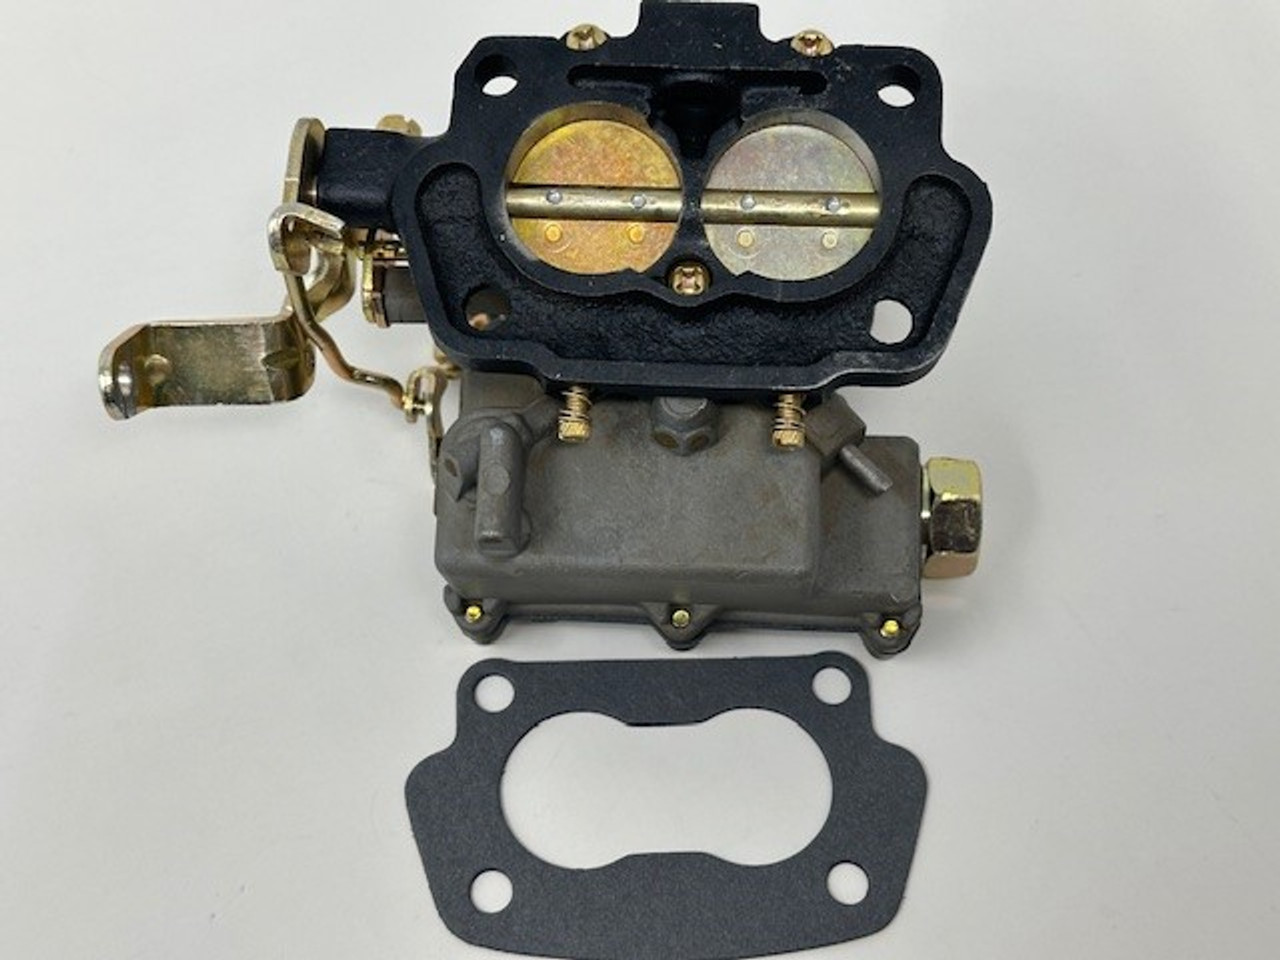 Rochester 2GC carburetor with manual choke